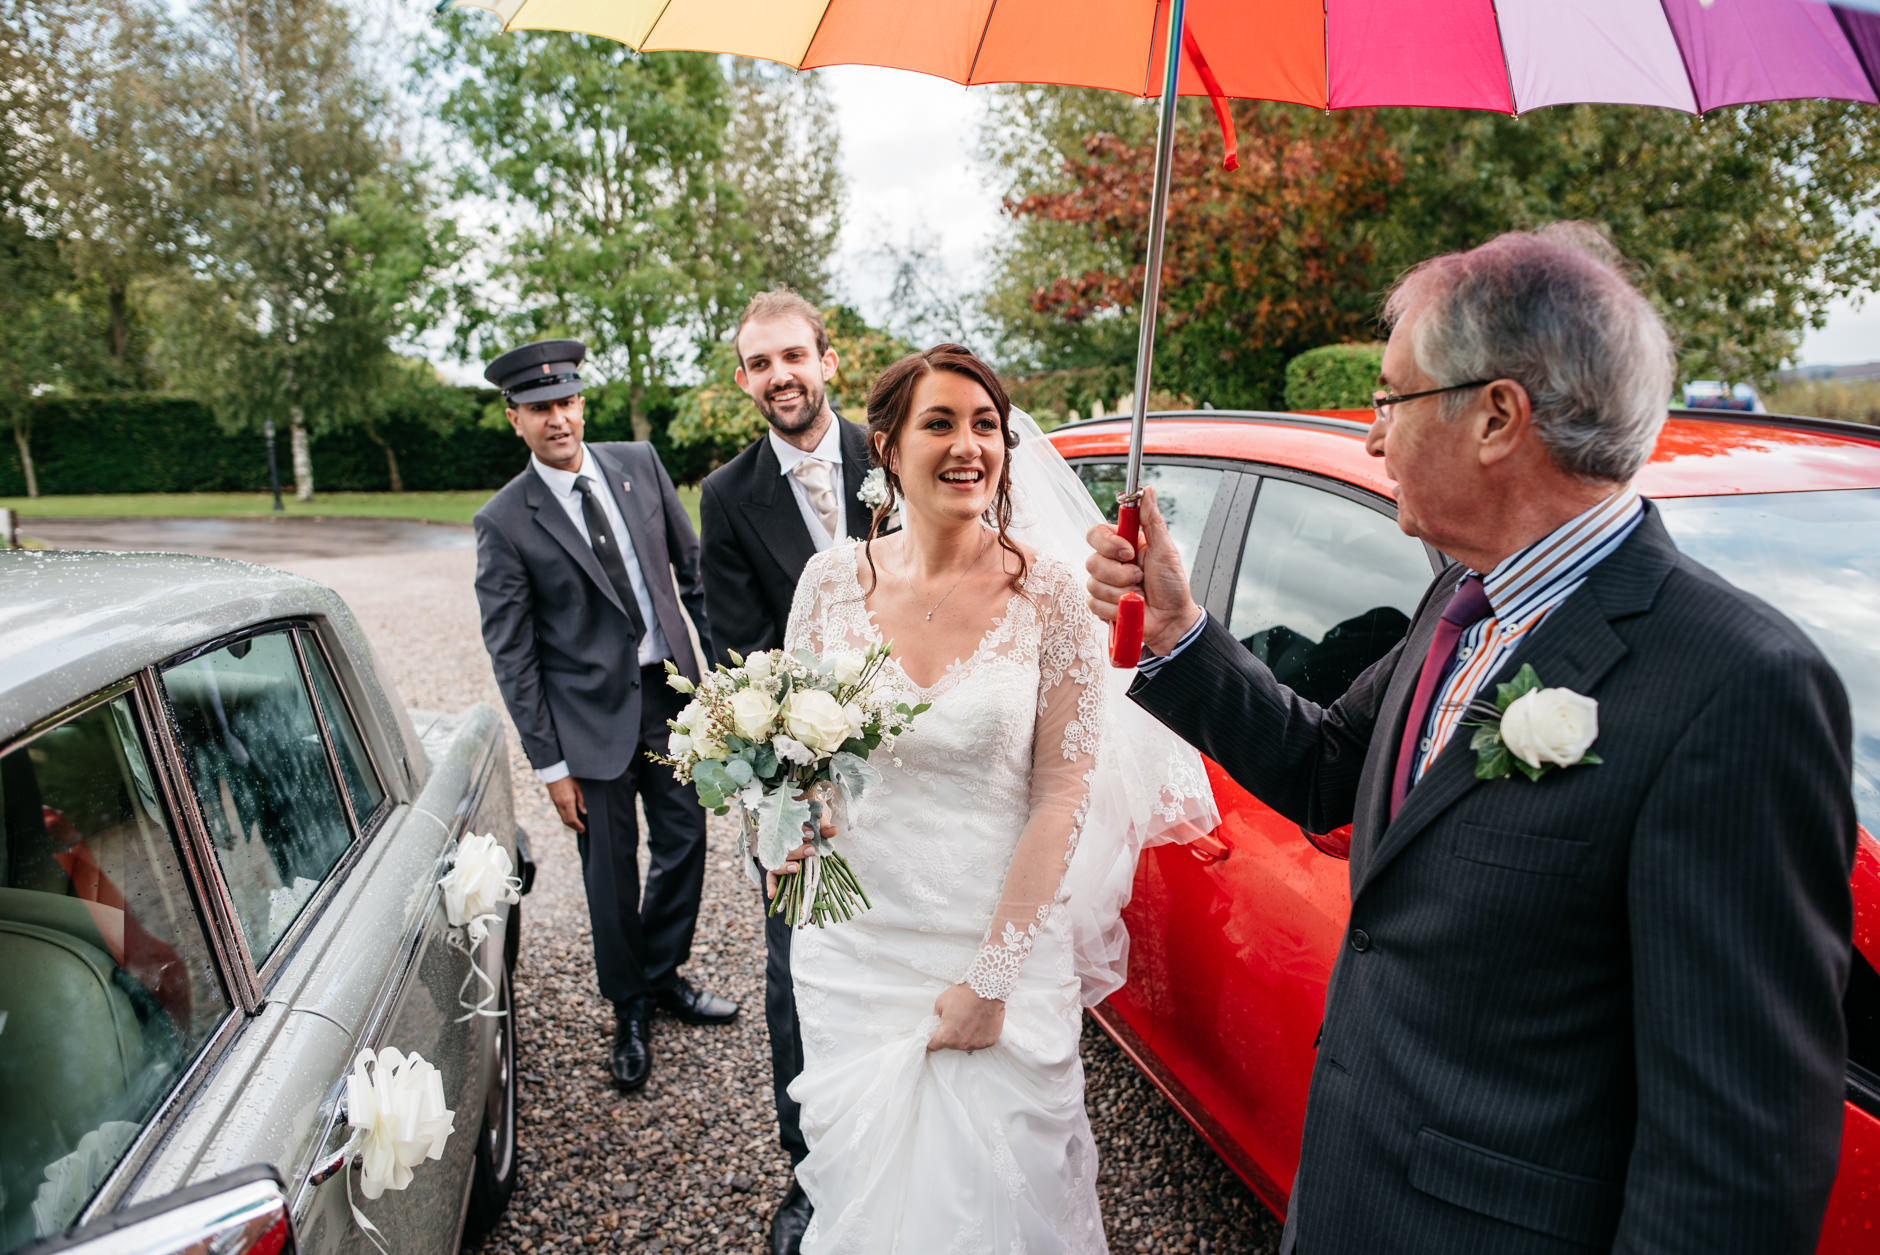 Bride and groom arrive at reception under umbrella